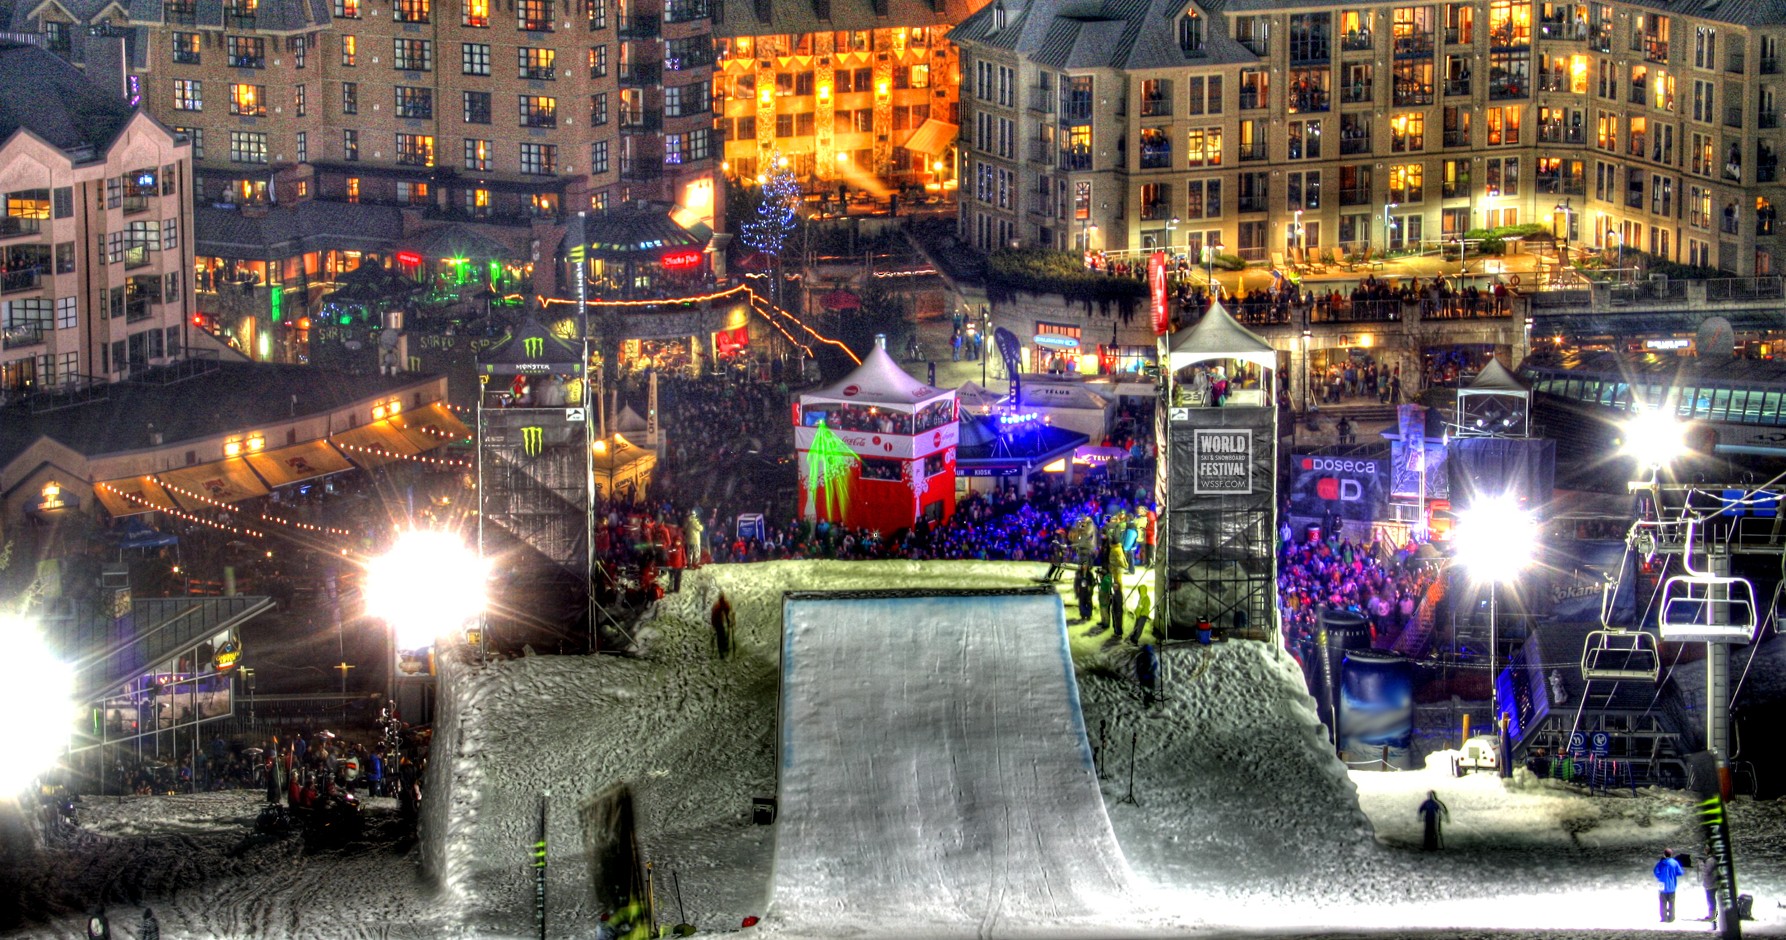 World ski and snowboard festival